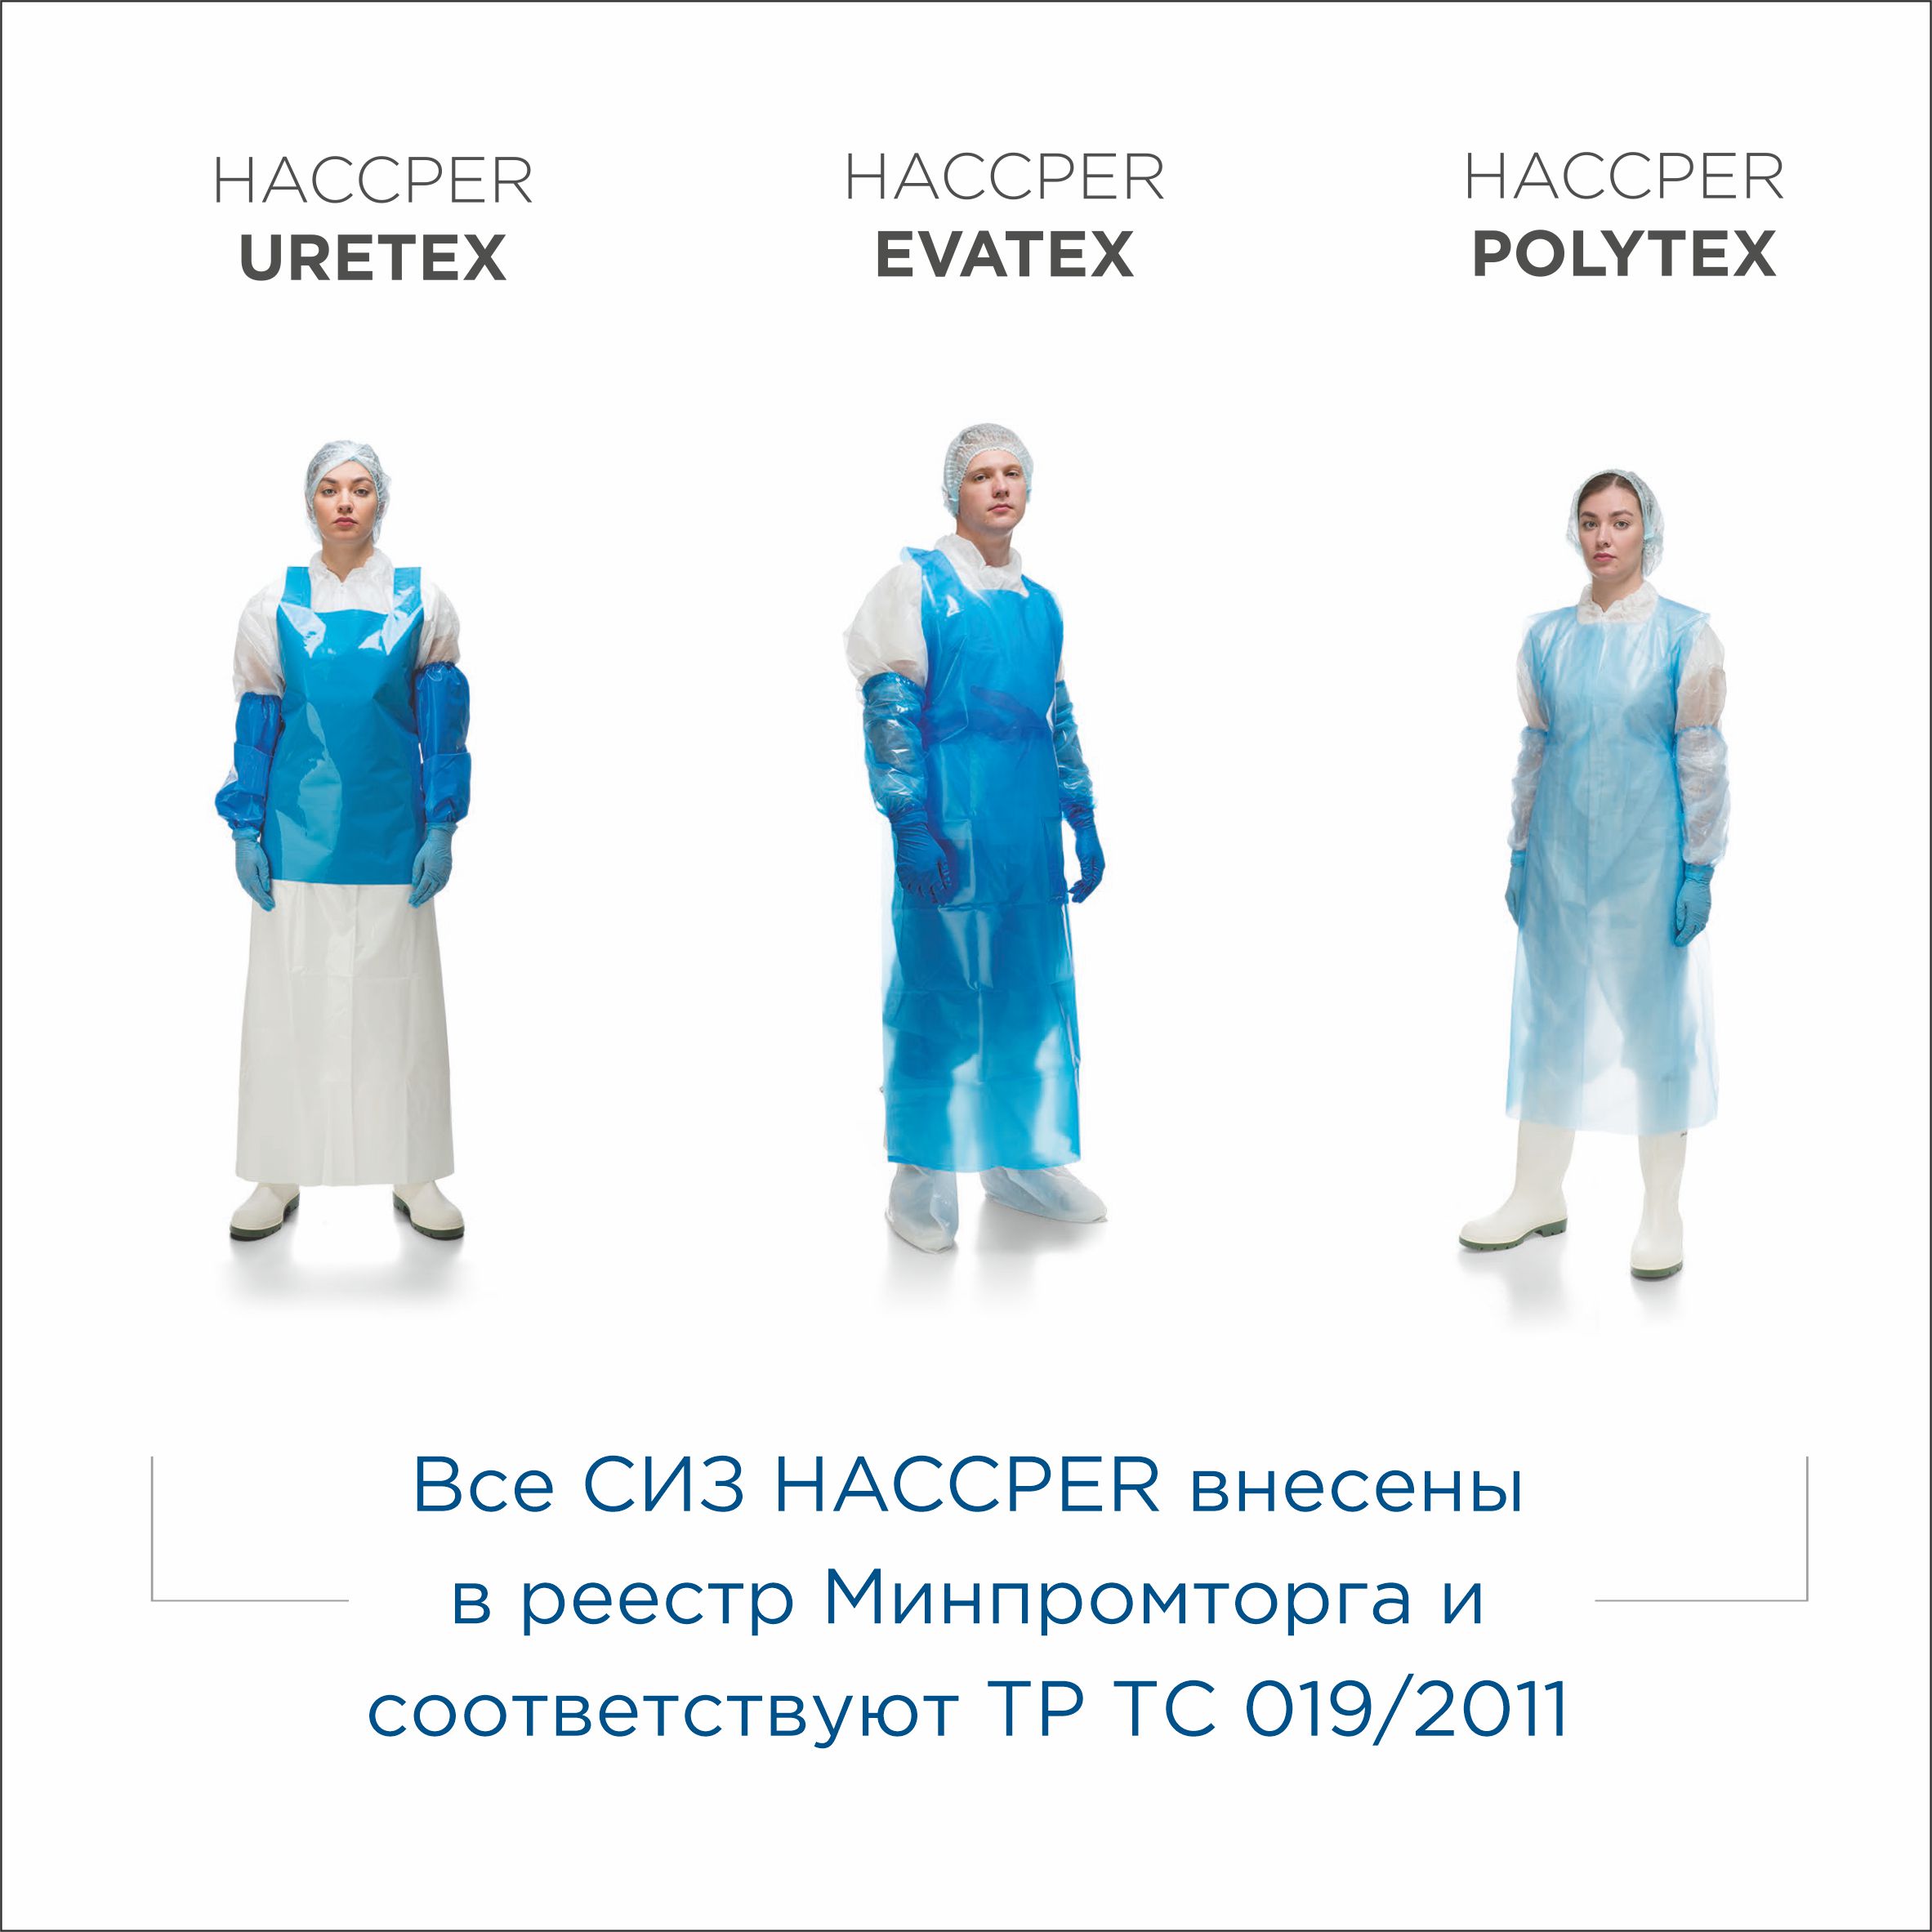 Фартук HACCPER Uretex 1500х830 мм, 150 мкм, синий 